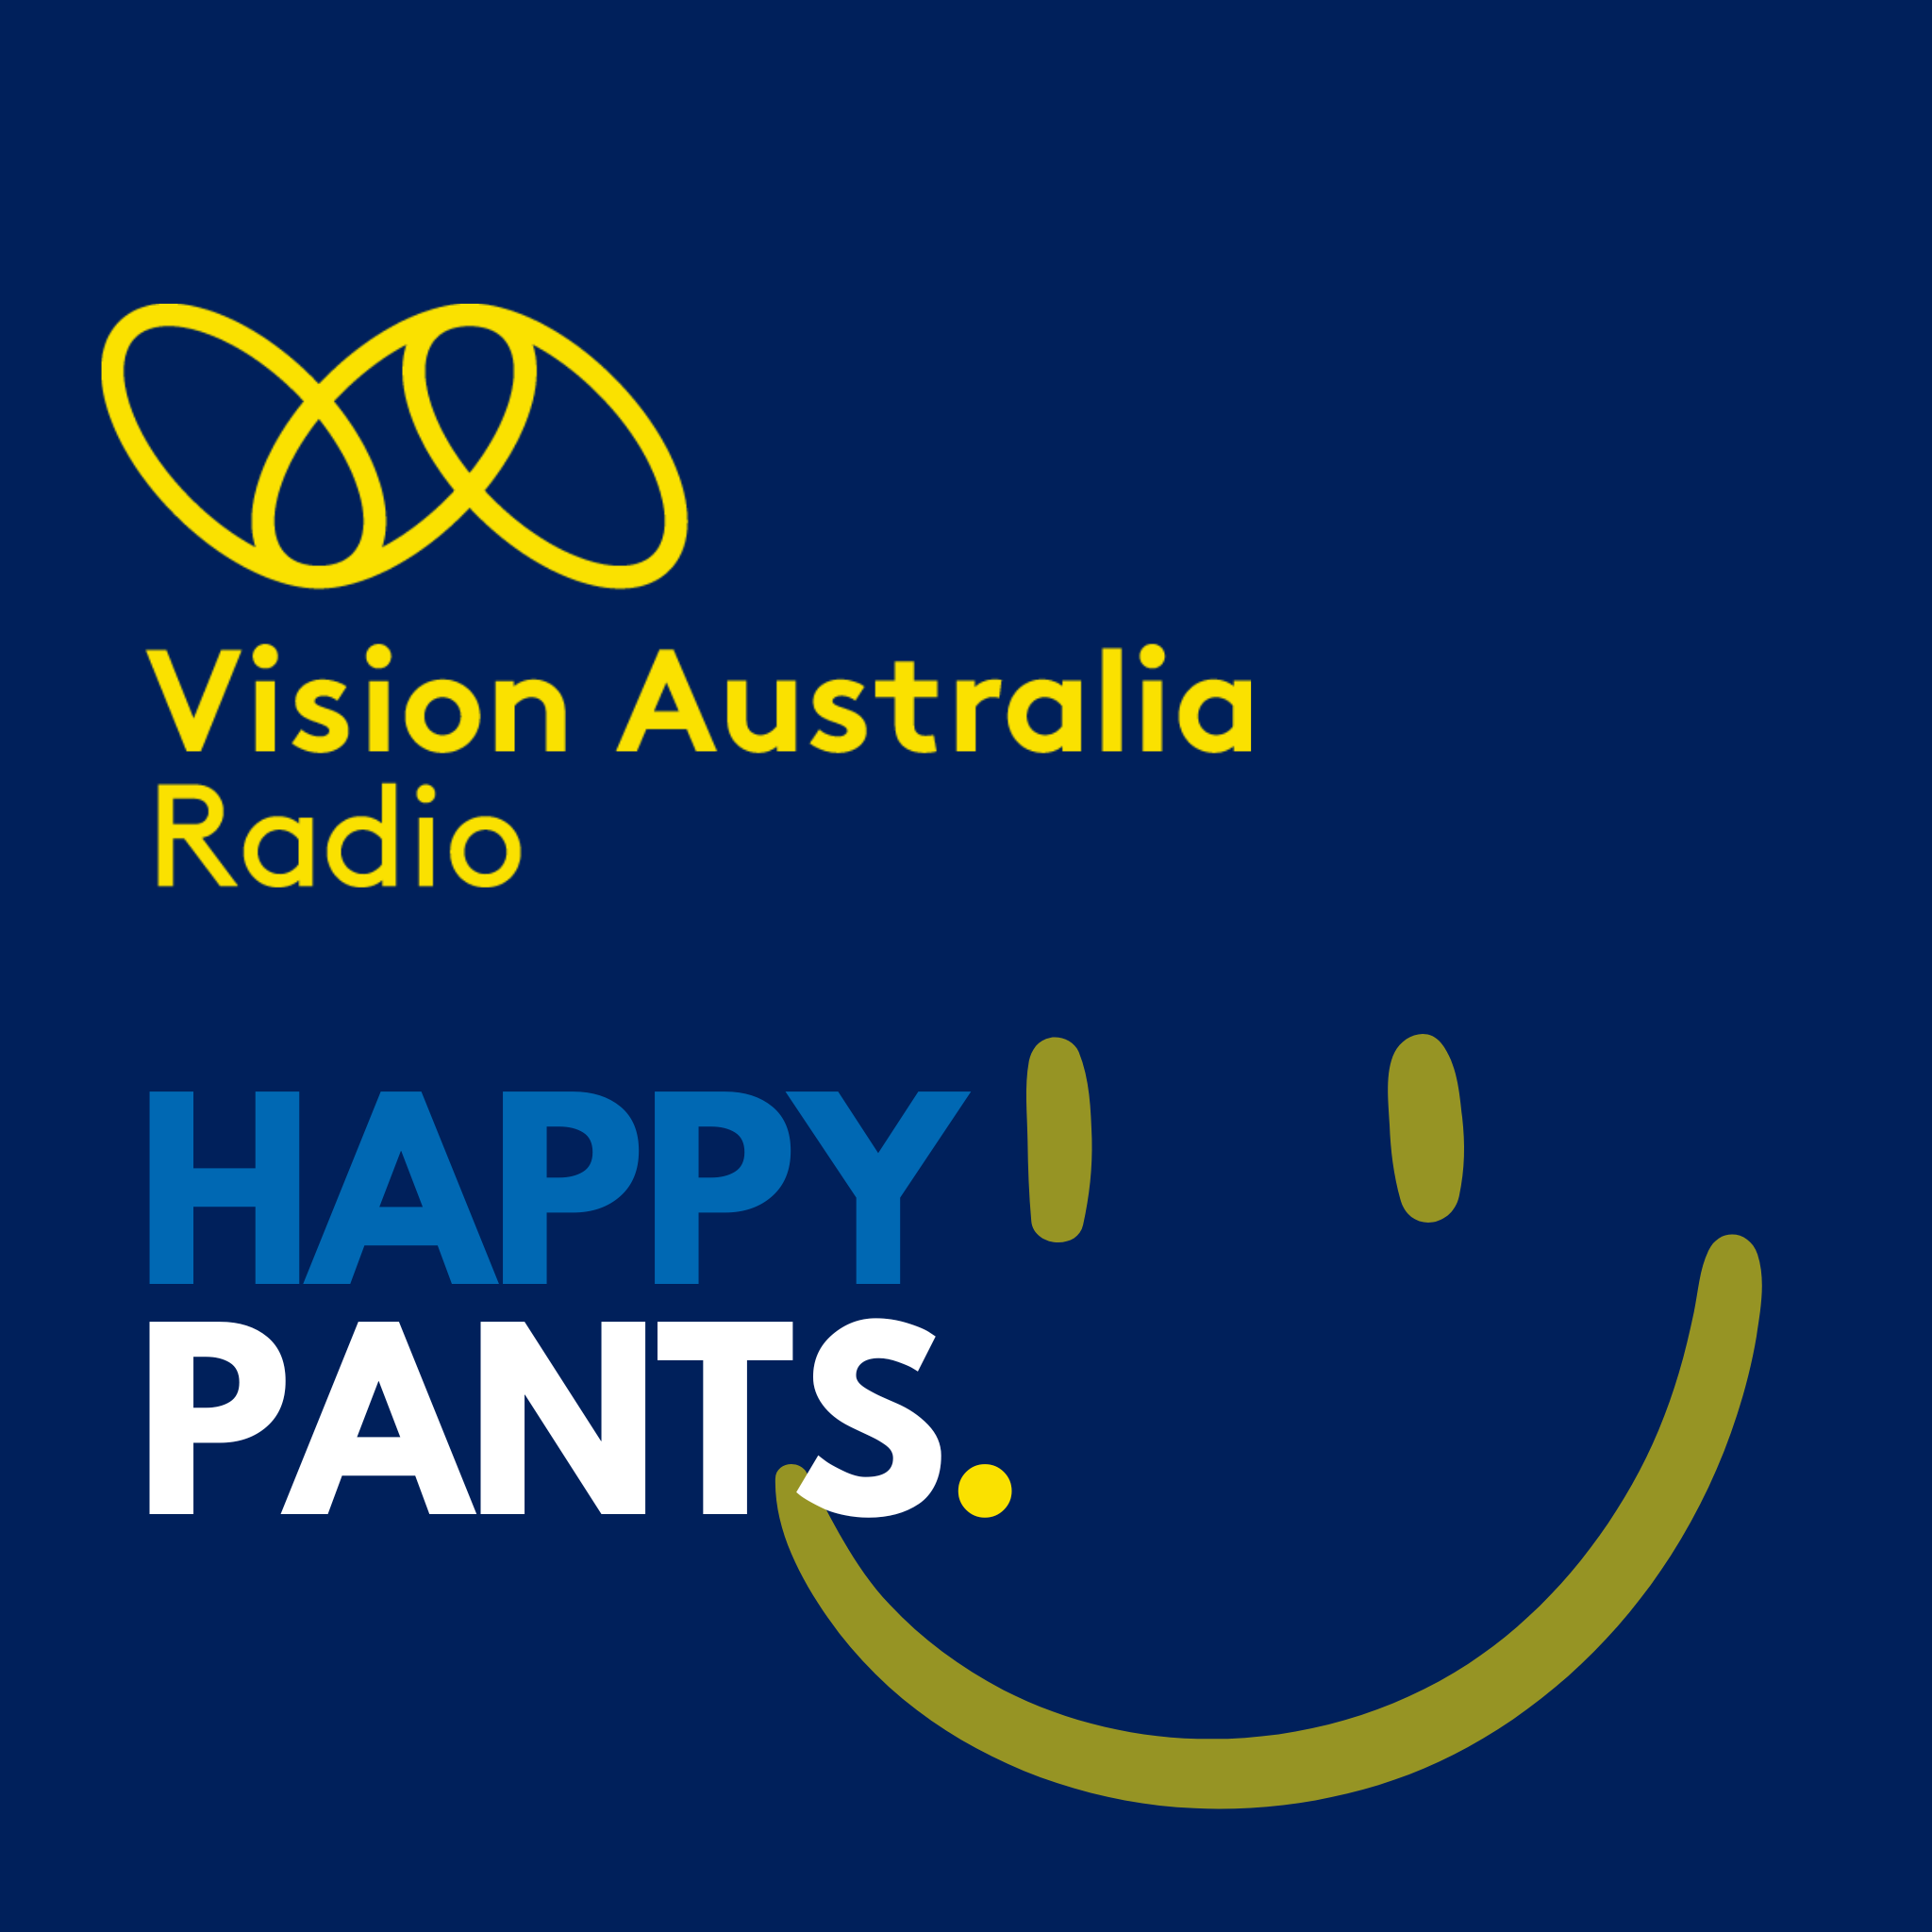 Happy Pants - April 6